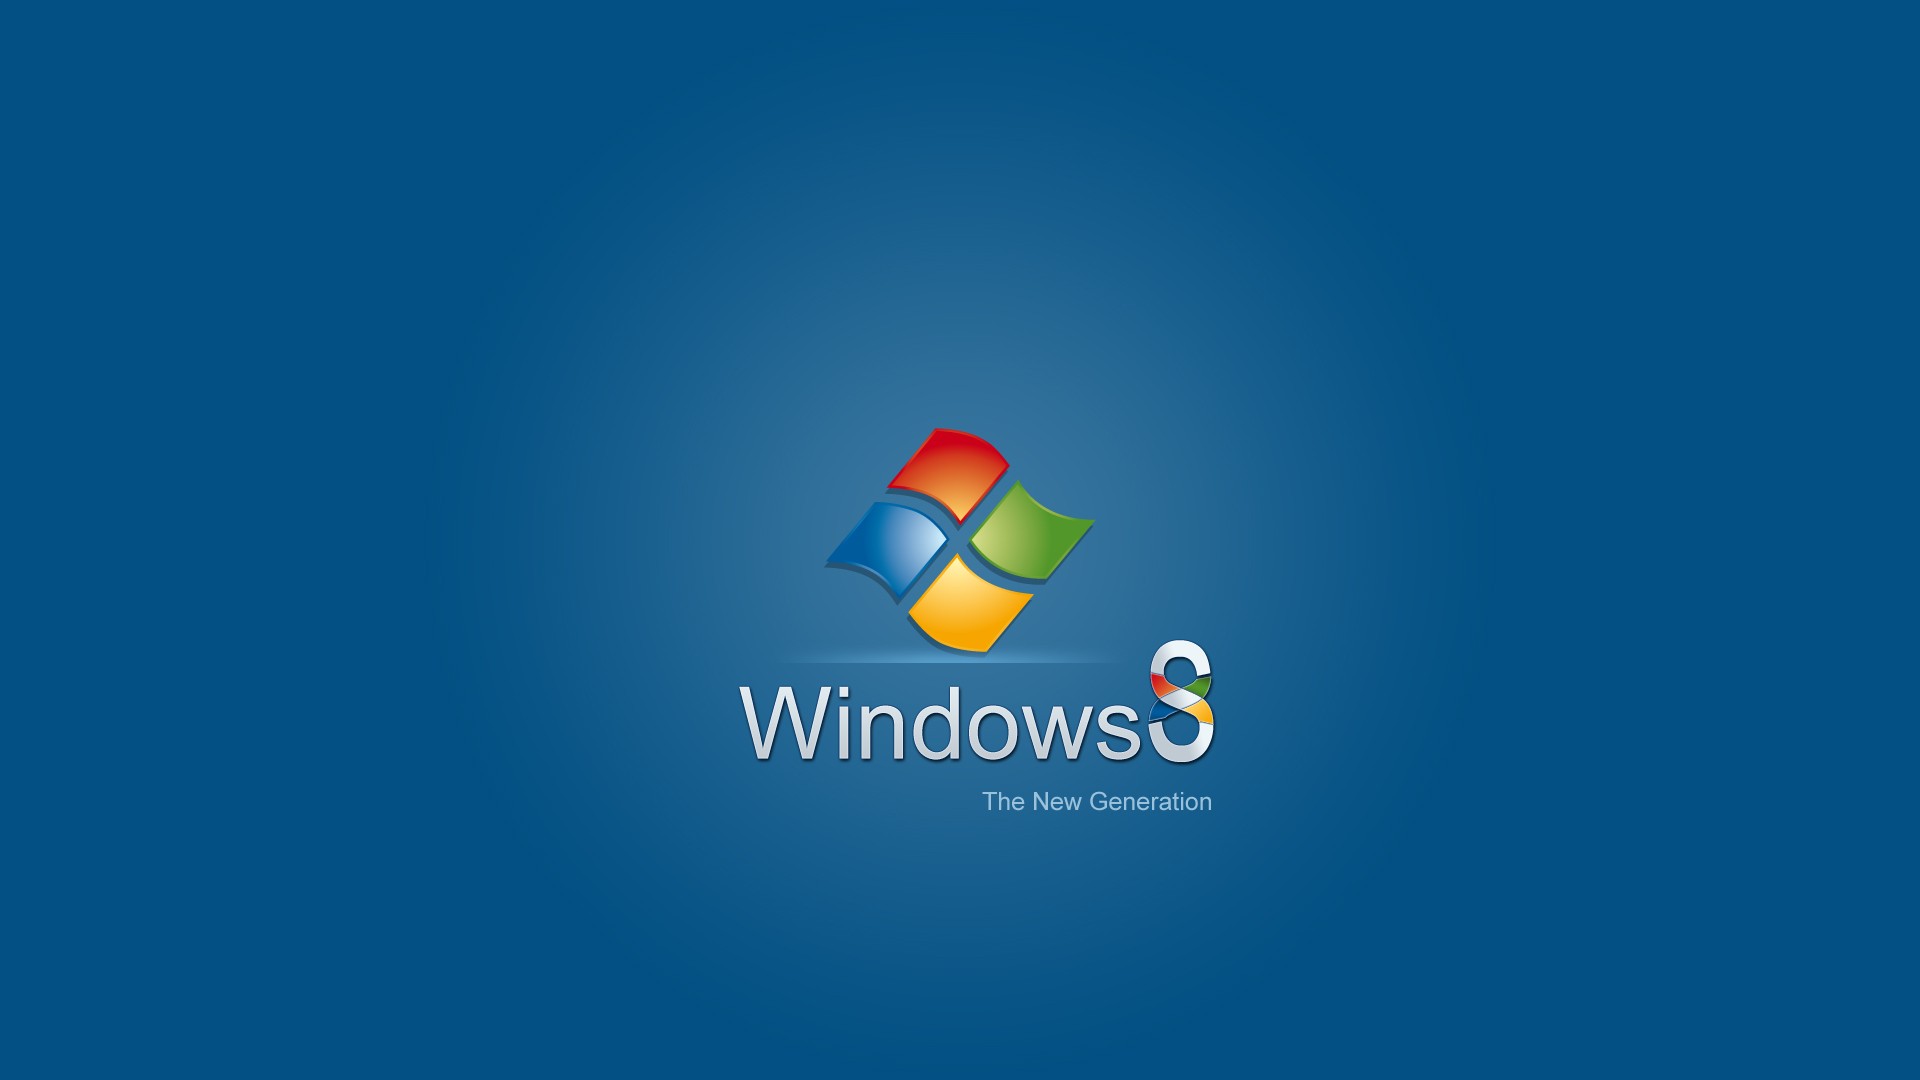 Windows 8 Wallpapers Windows 8 Myspace Backgrounds Windows 8